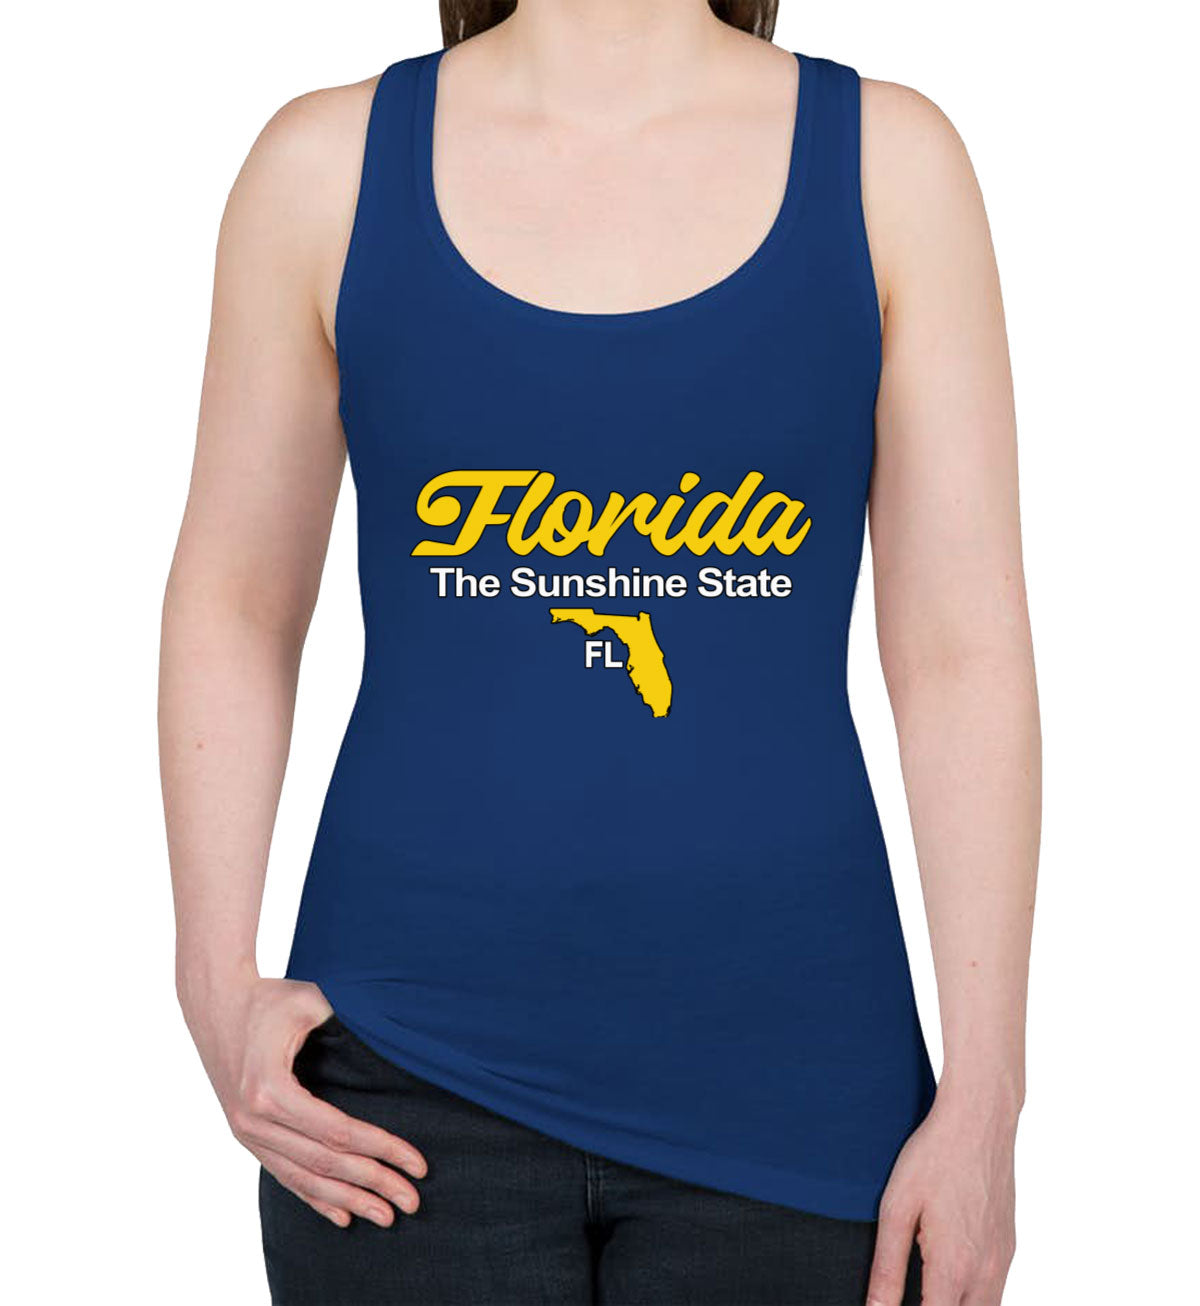 Florida The Sunshine State Women's Racerback Tank Top